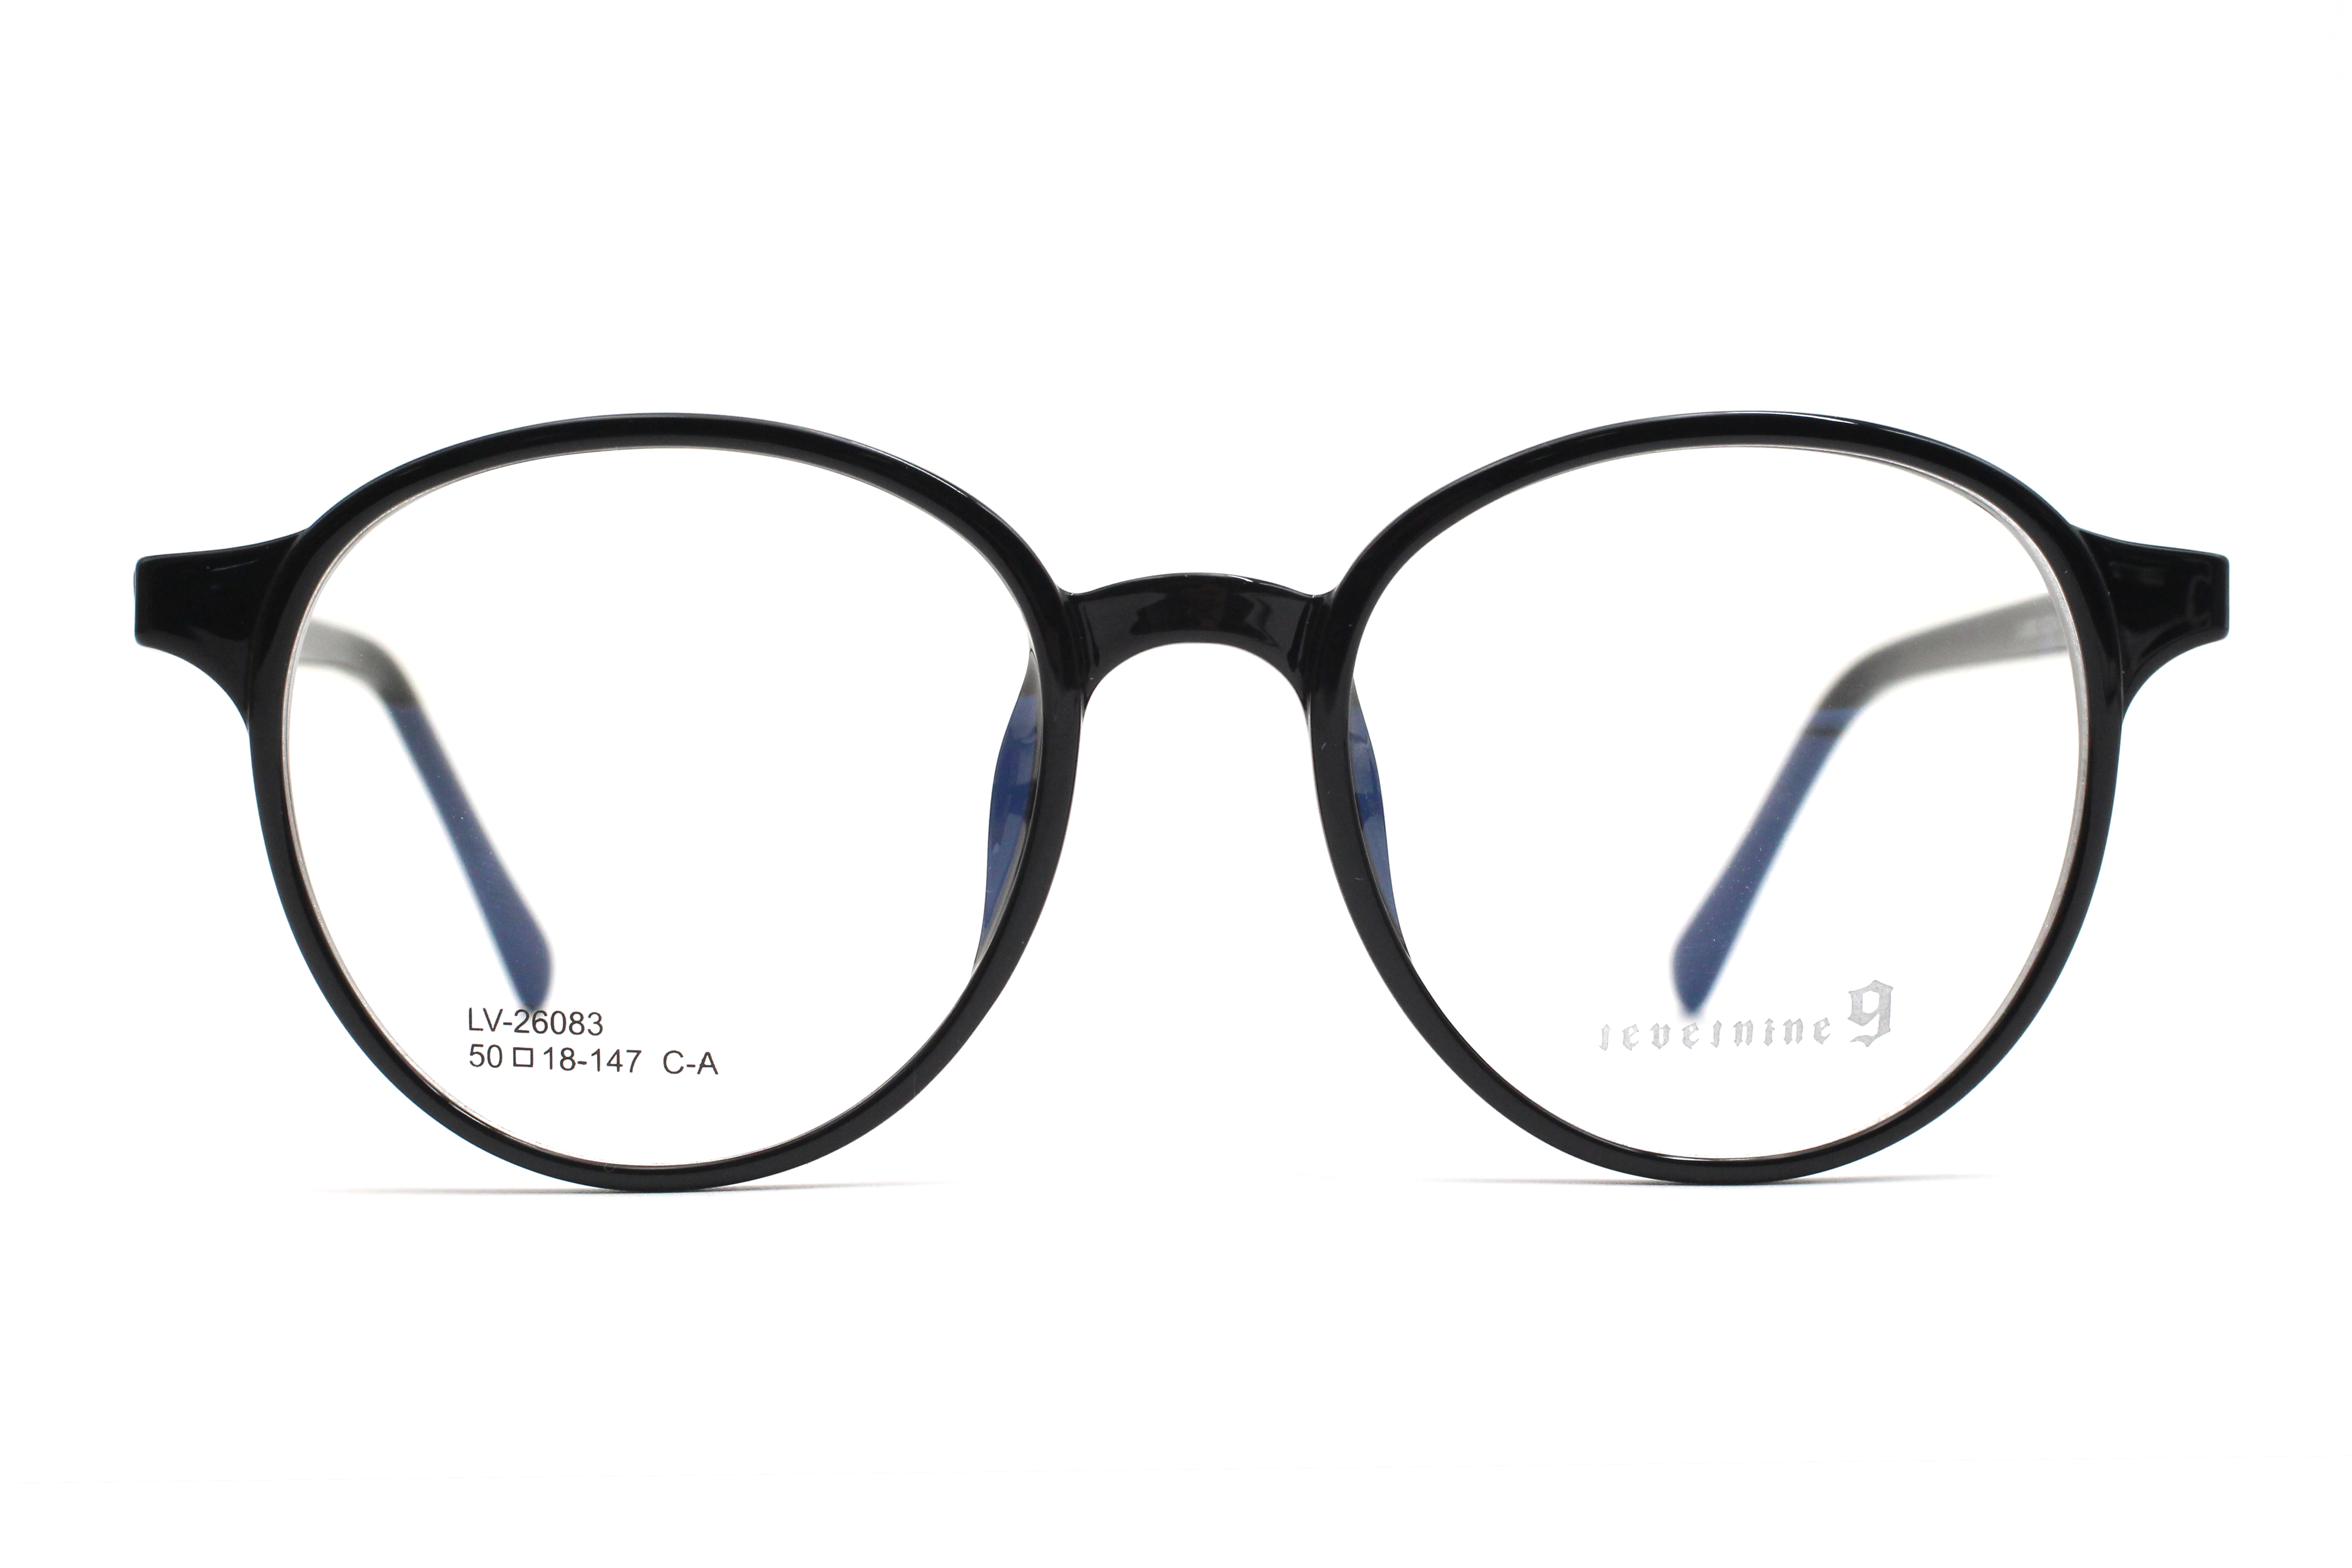 Wholesale Tr Glasses Frames 26083